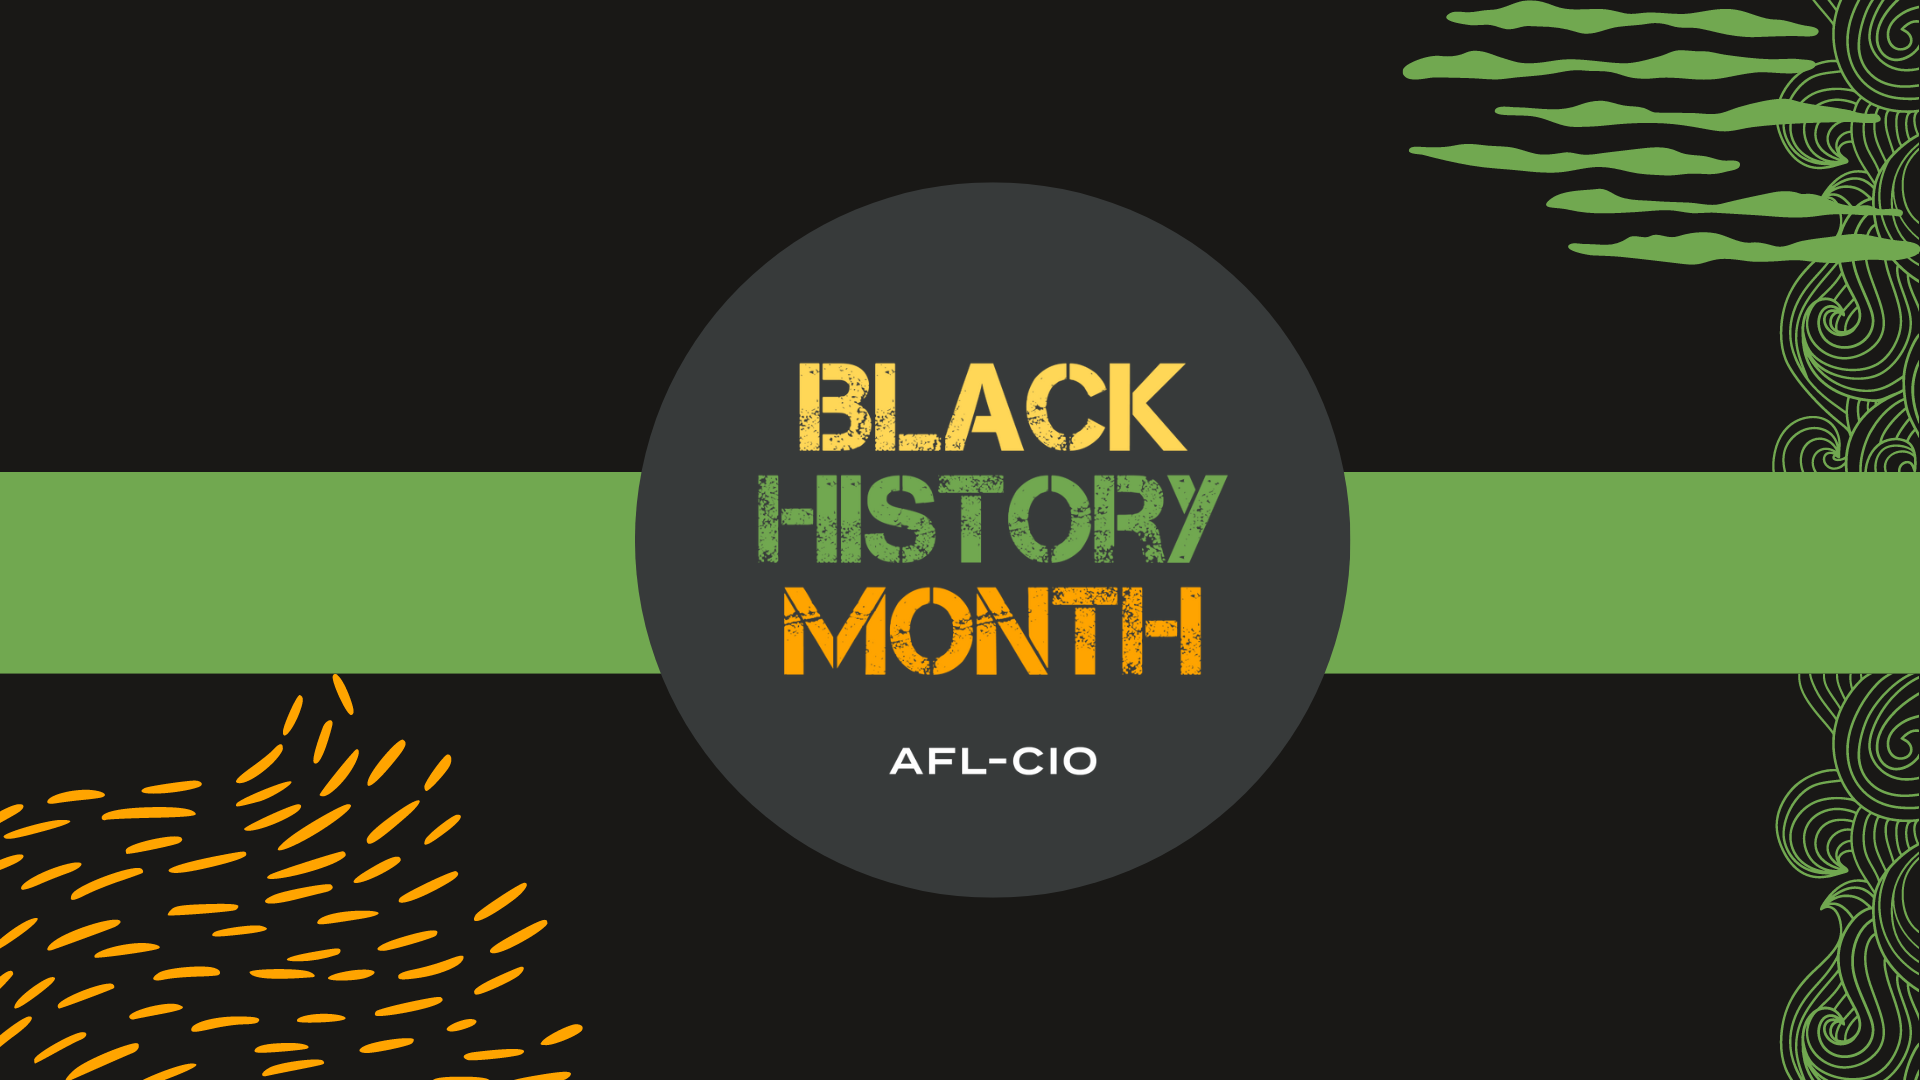 Black History Month. AFL-CIO.